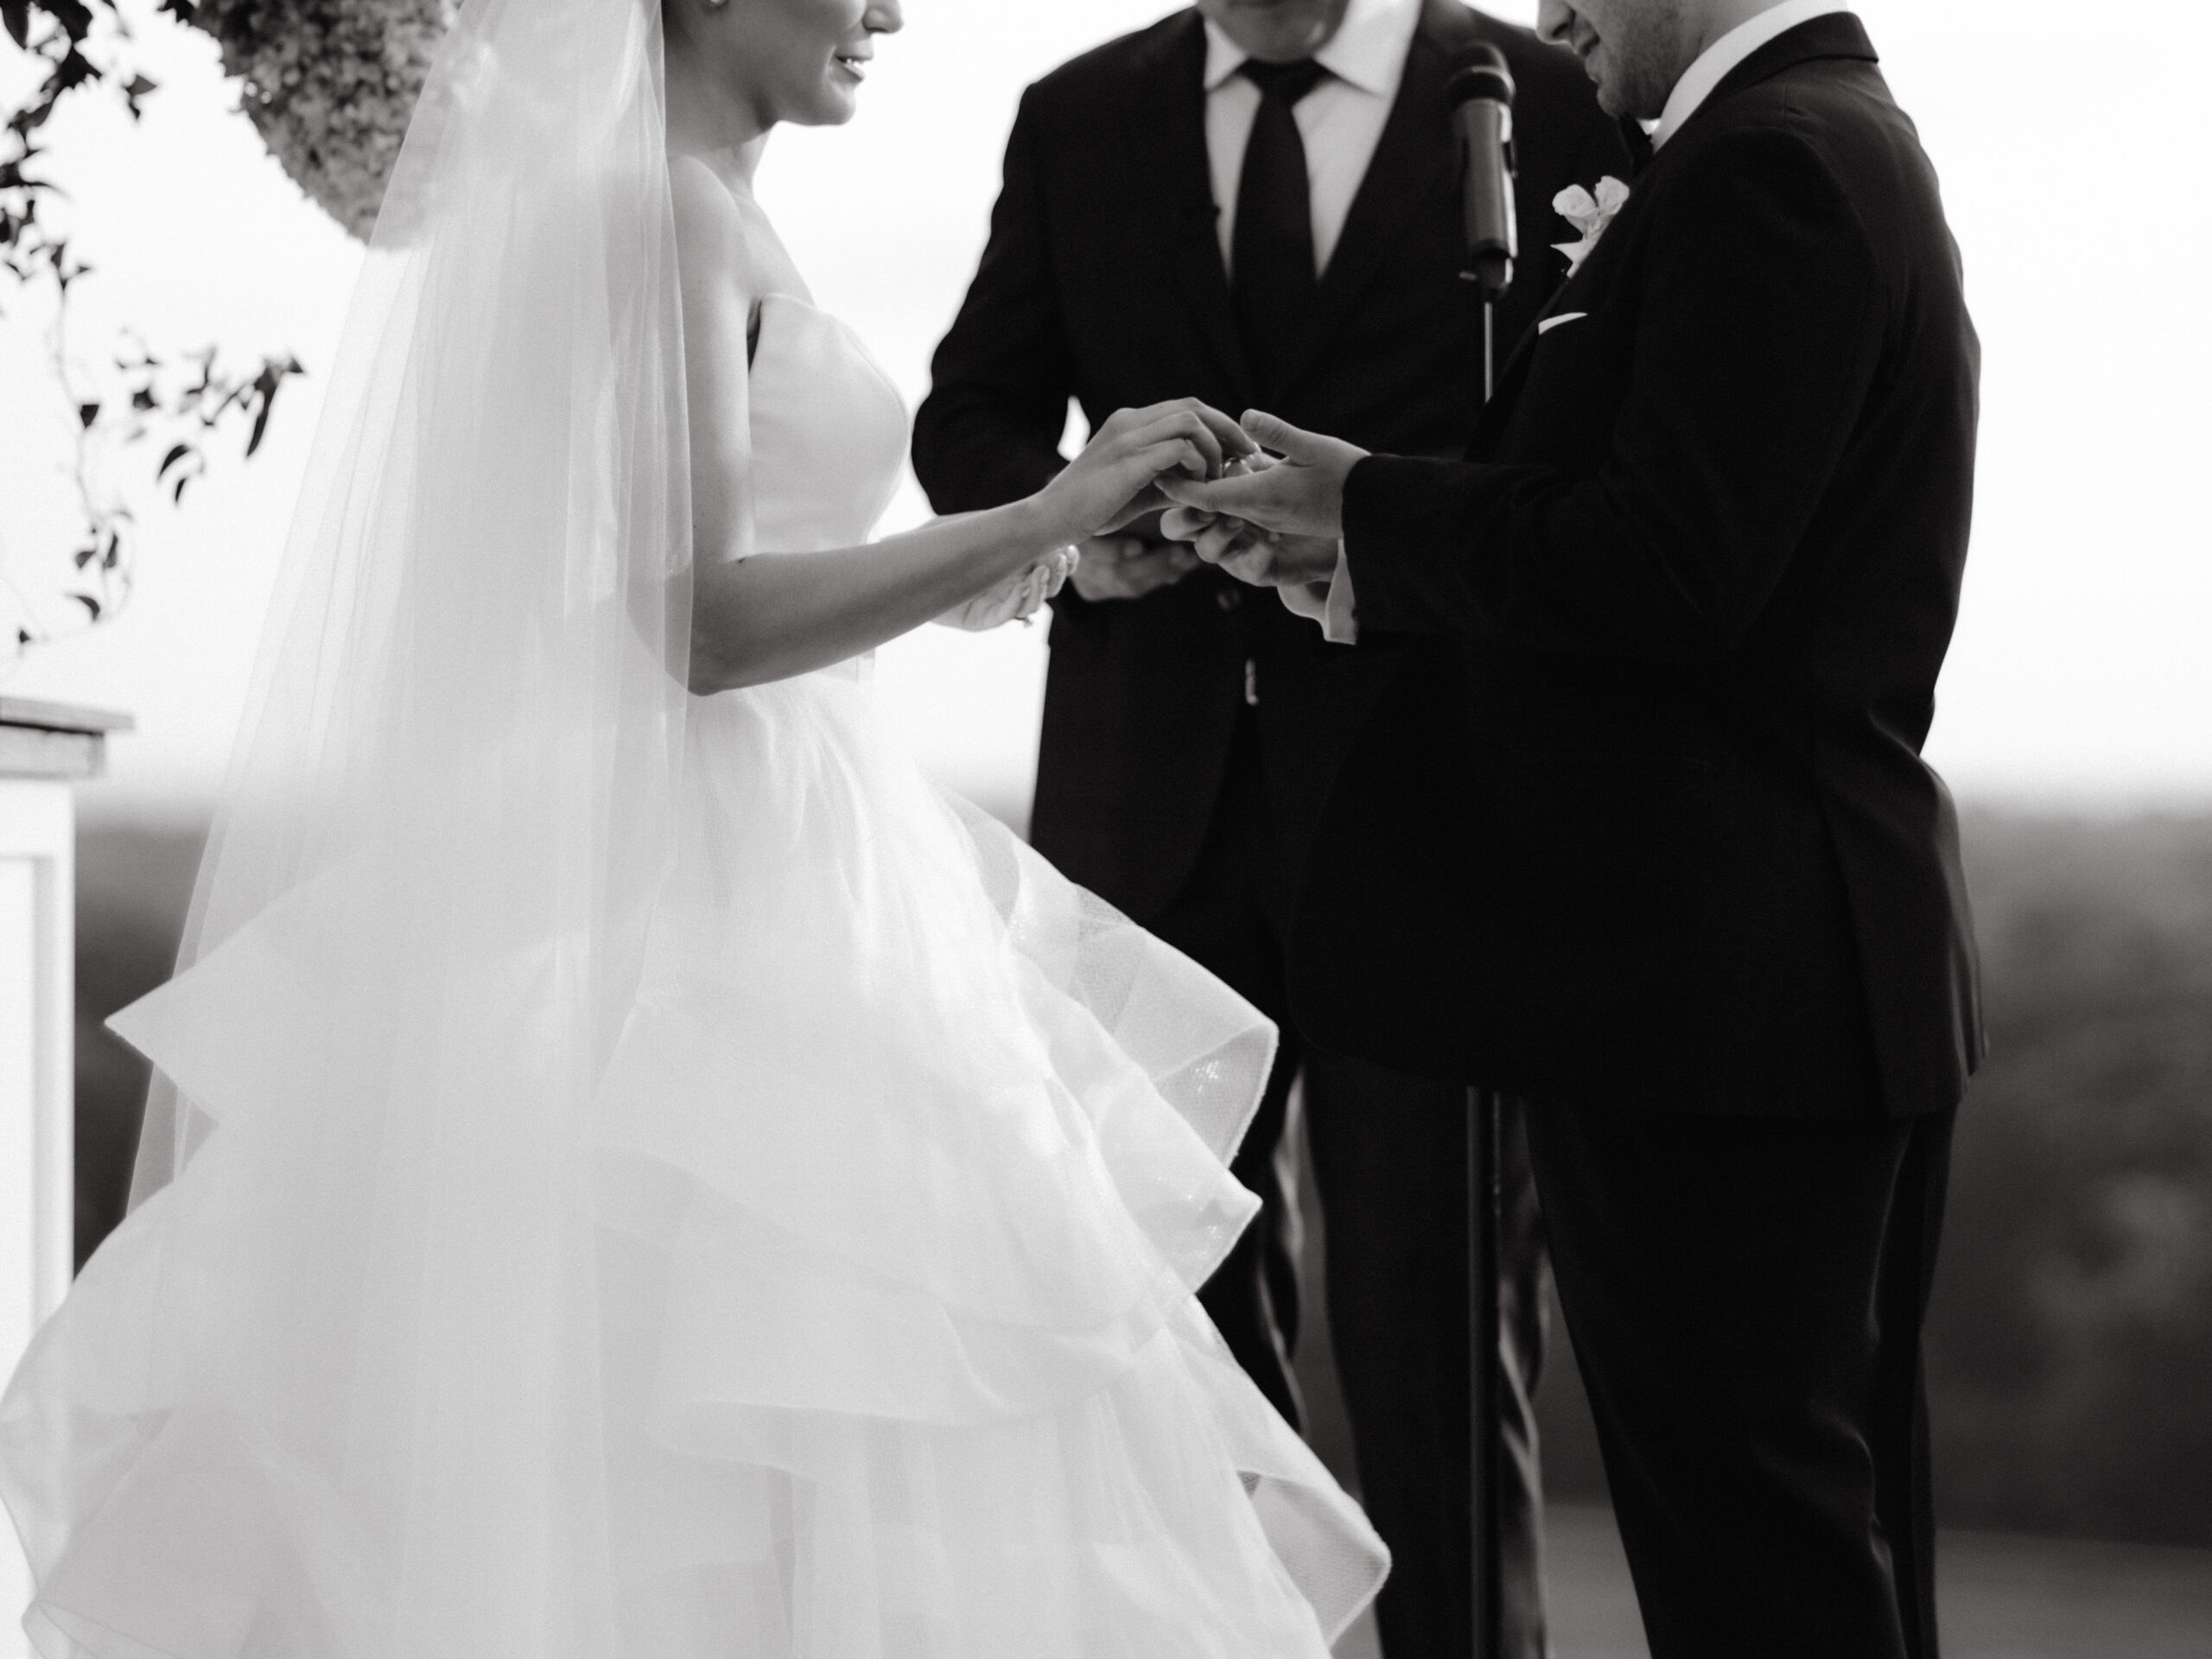 Black and white documentary wedding photography image of the wedding ceremony by Jenny Fu Studio